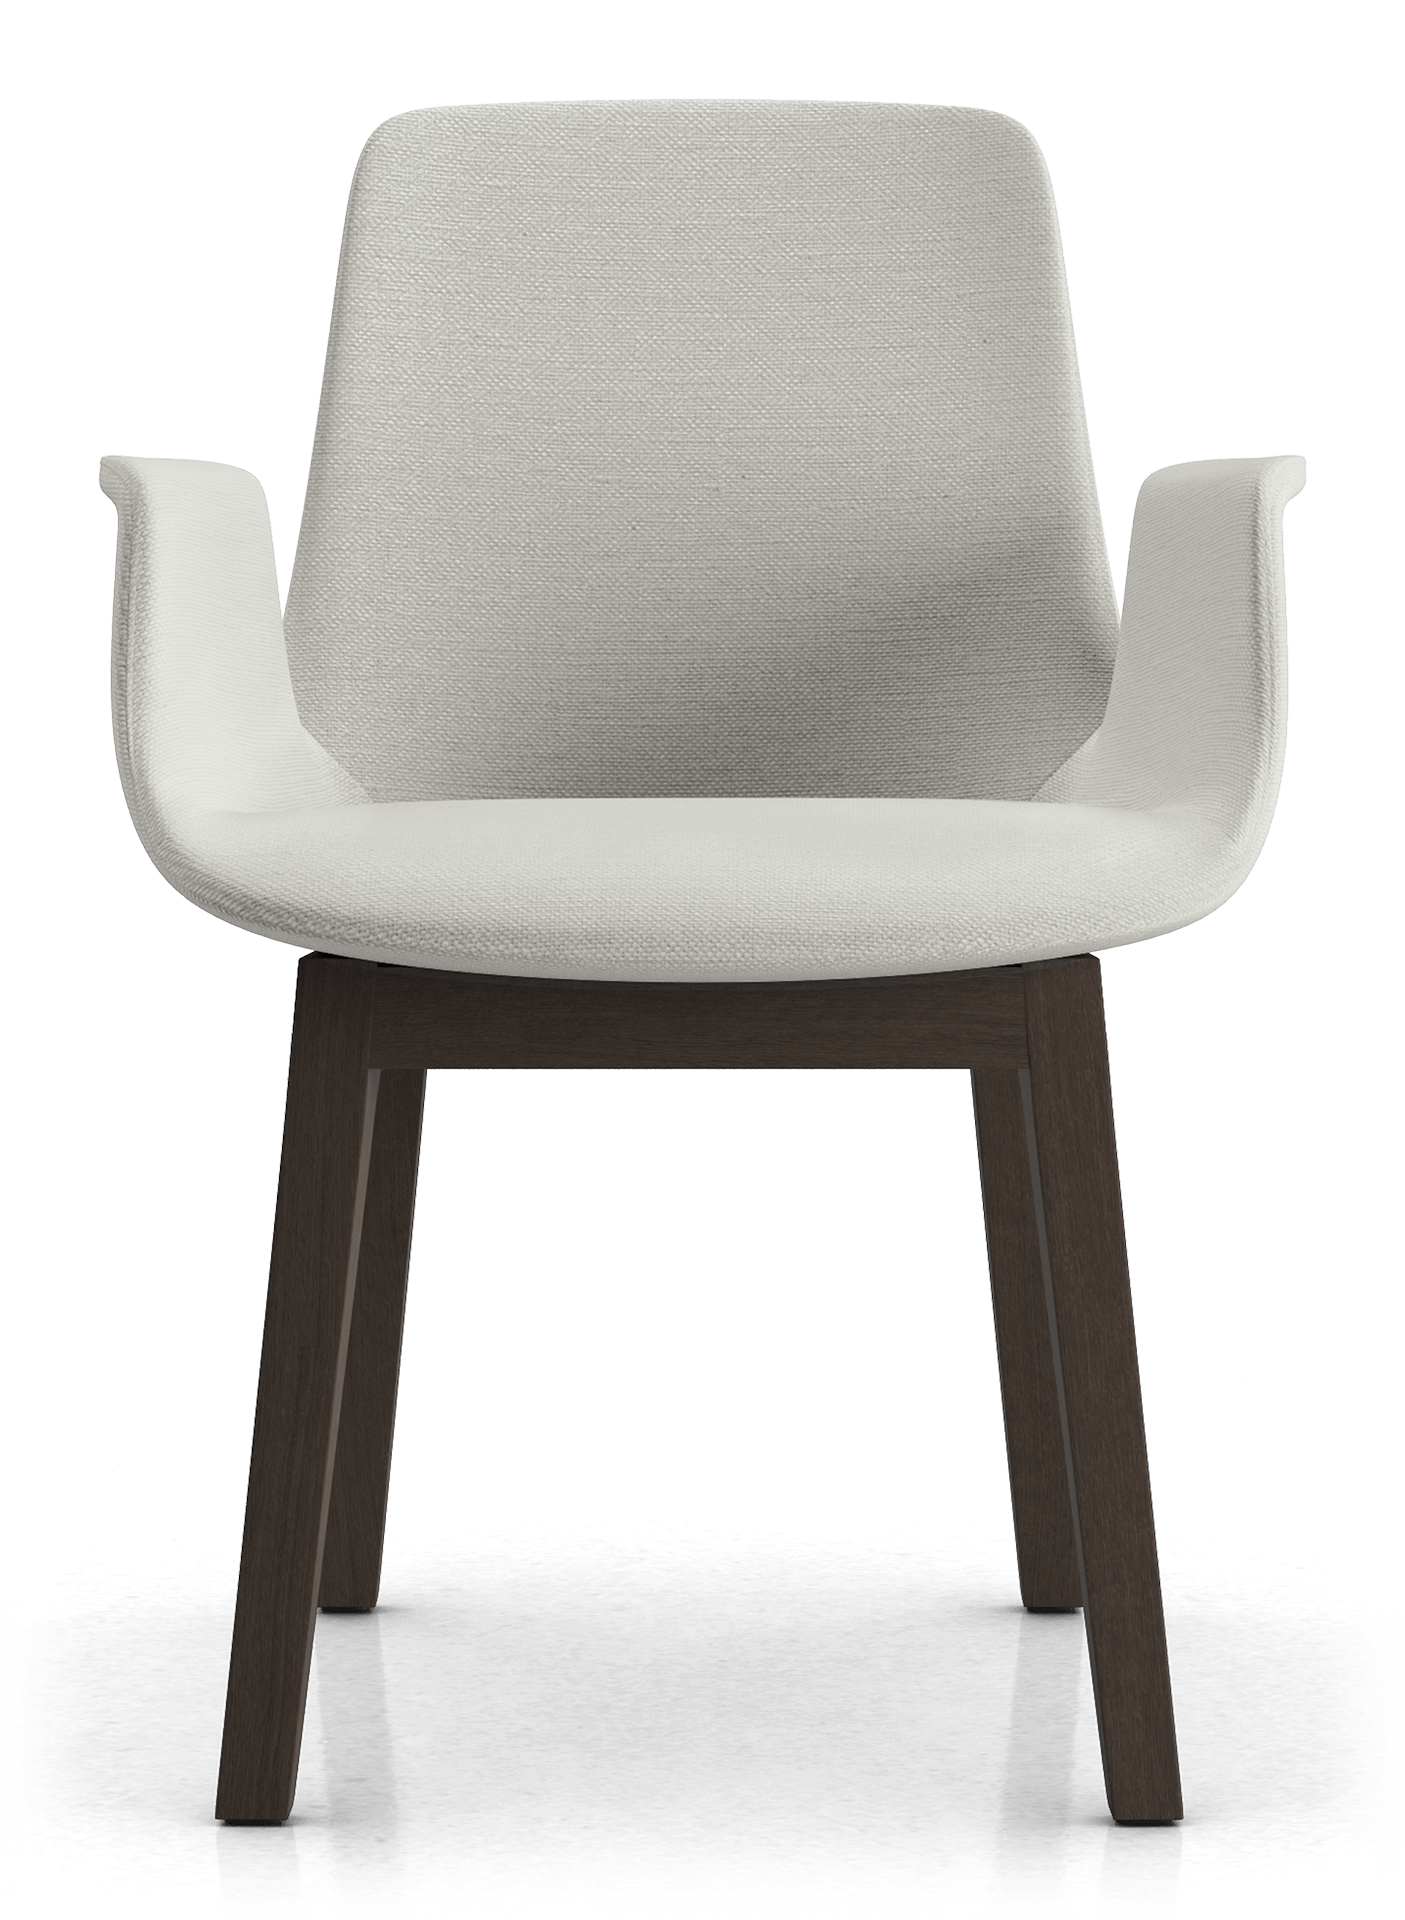 Mercer Chair